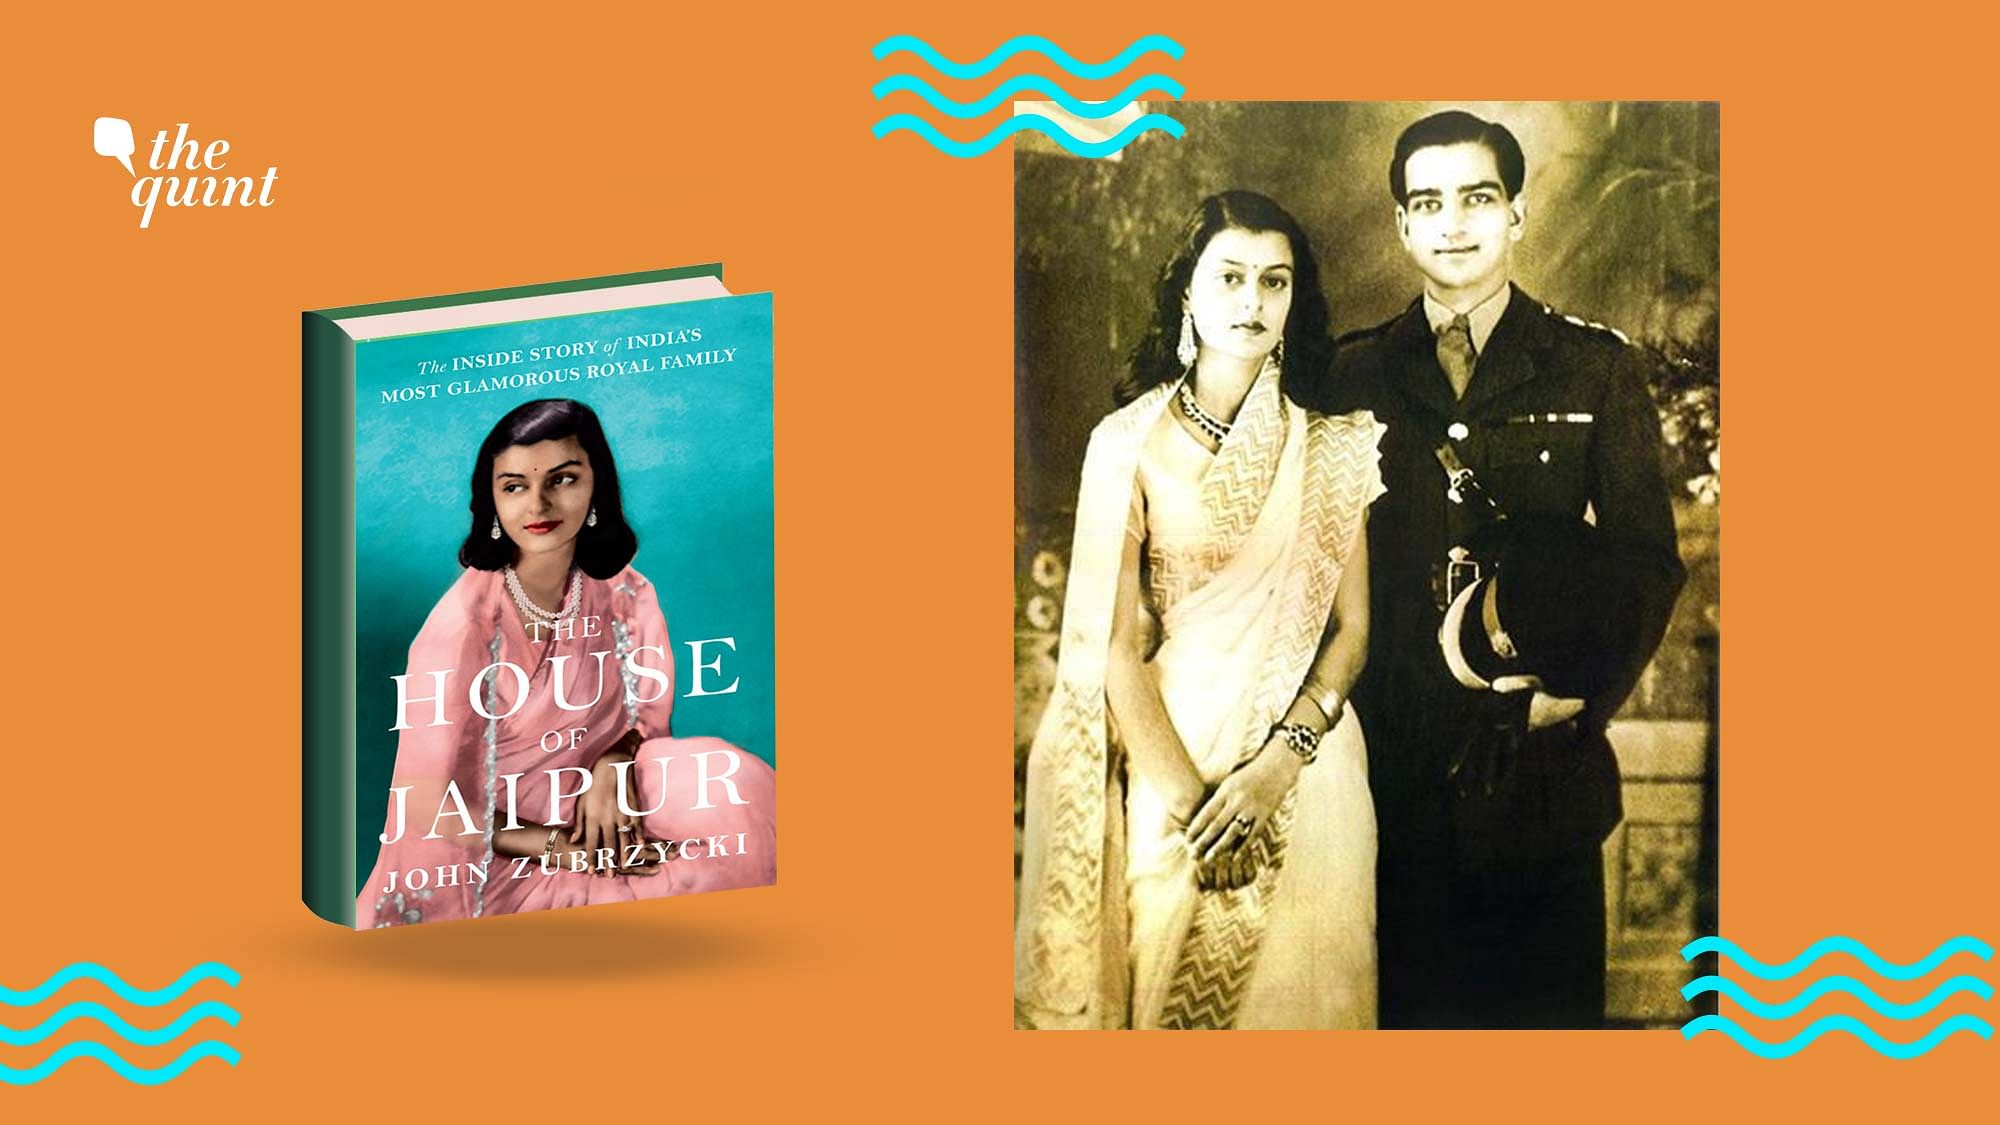 John Zubrzycki’s House of Jaipur features fascinating insights into the family of Maharani Gayatri Devi.